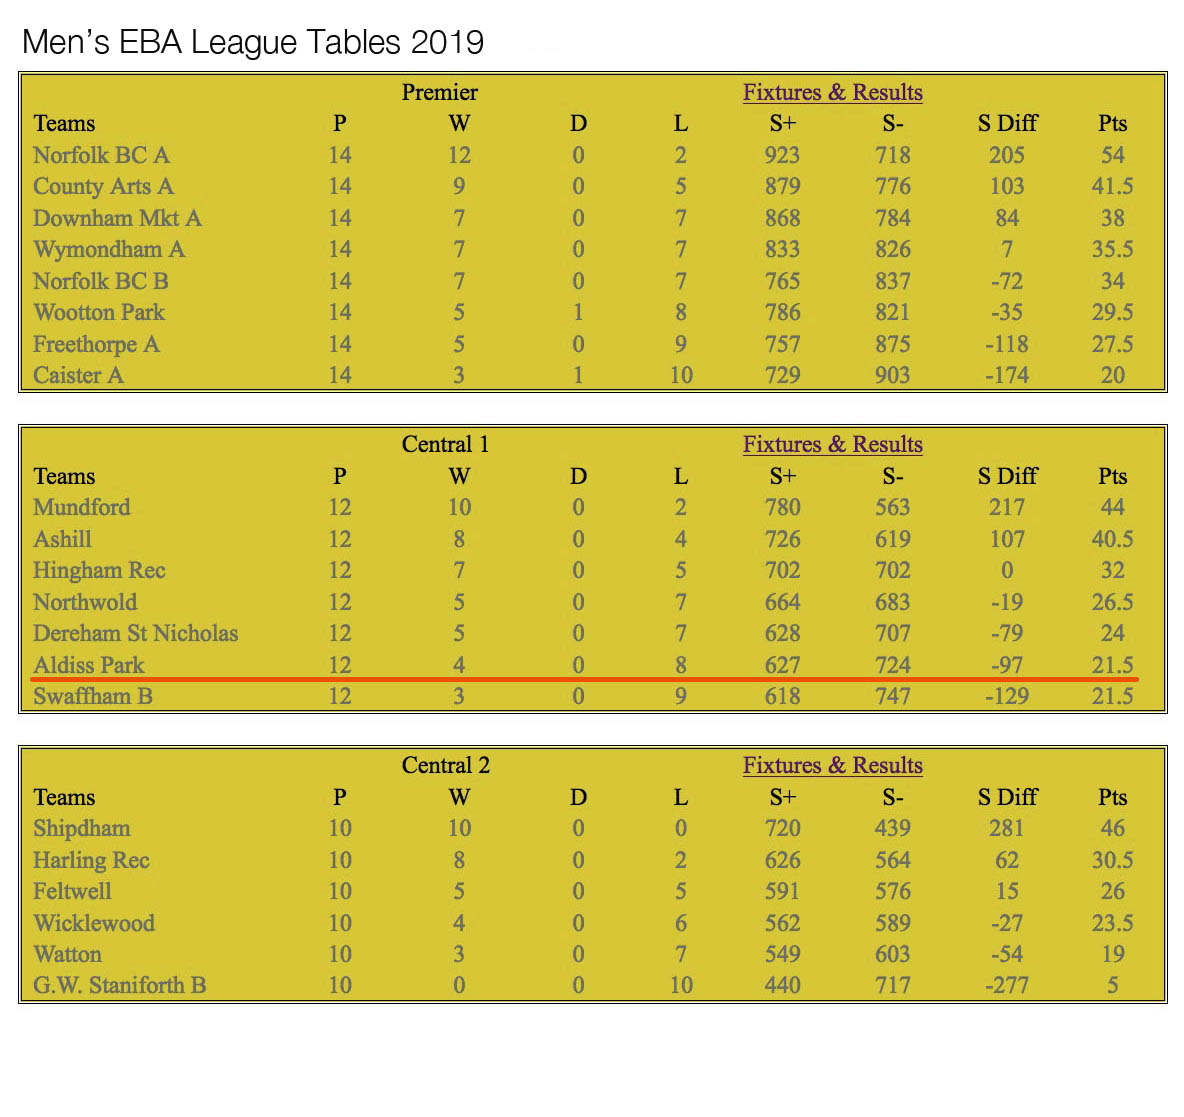 Men's EBA League Table 2019